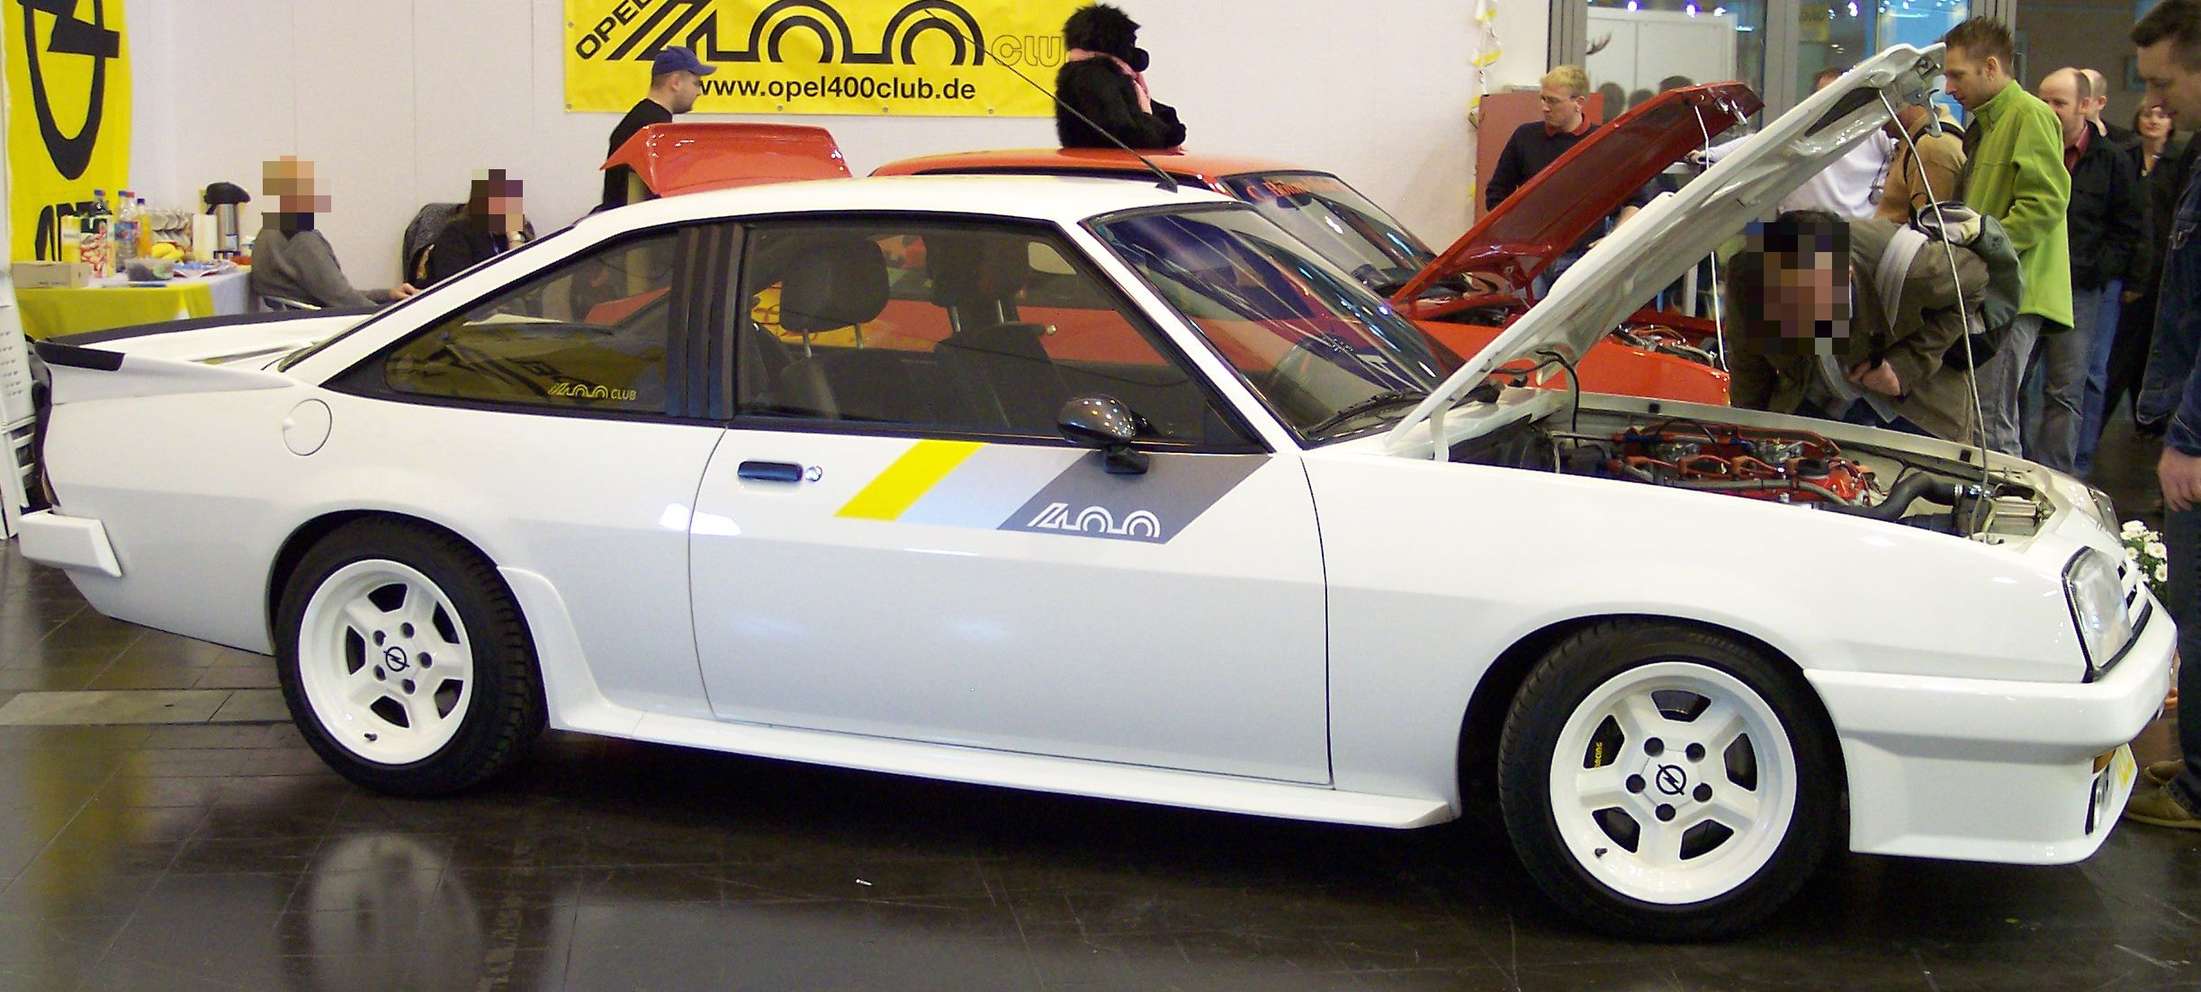 Opel Manta 400 #7050833